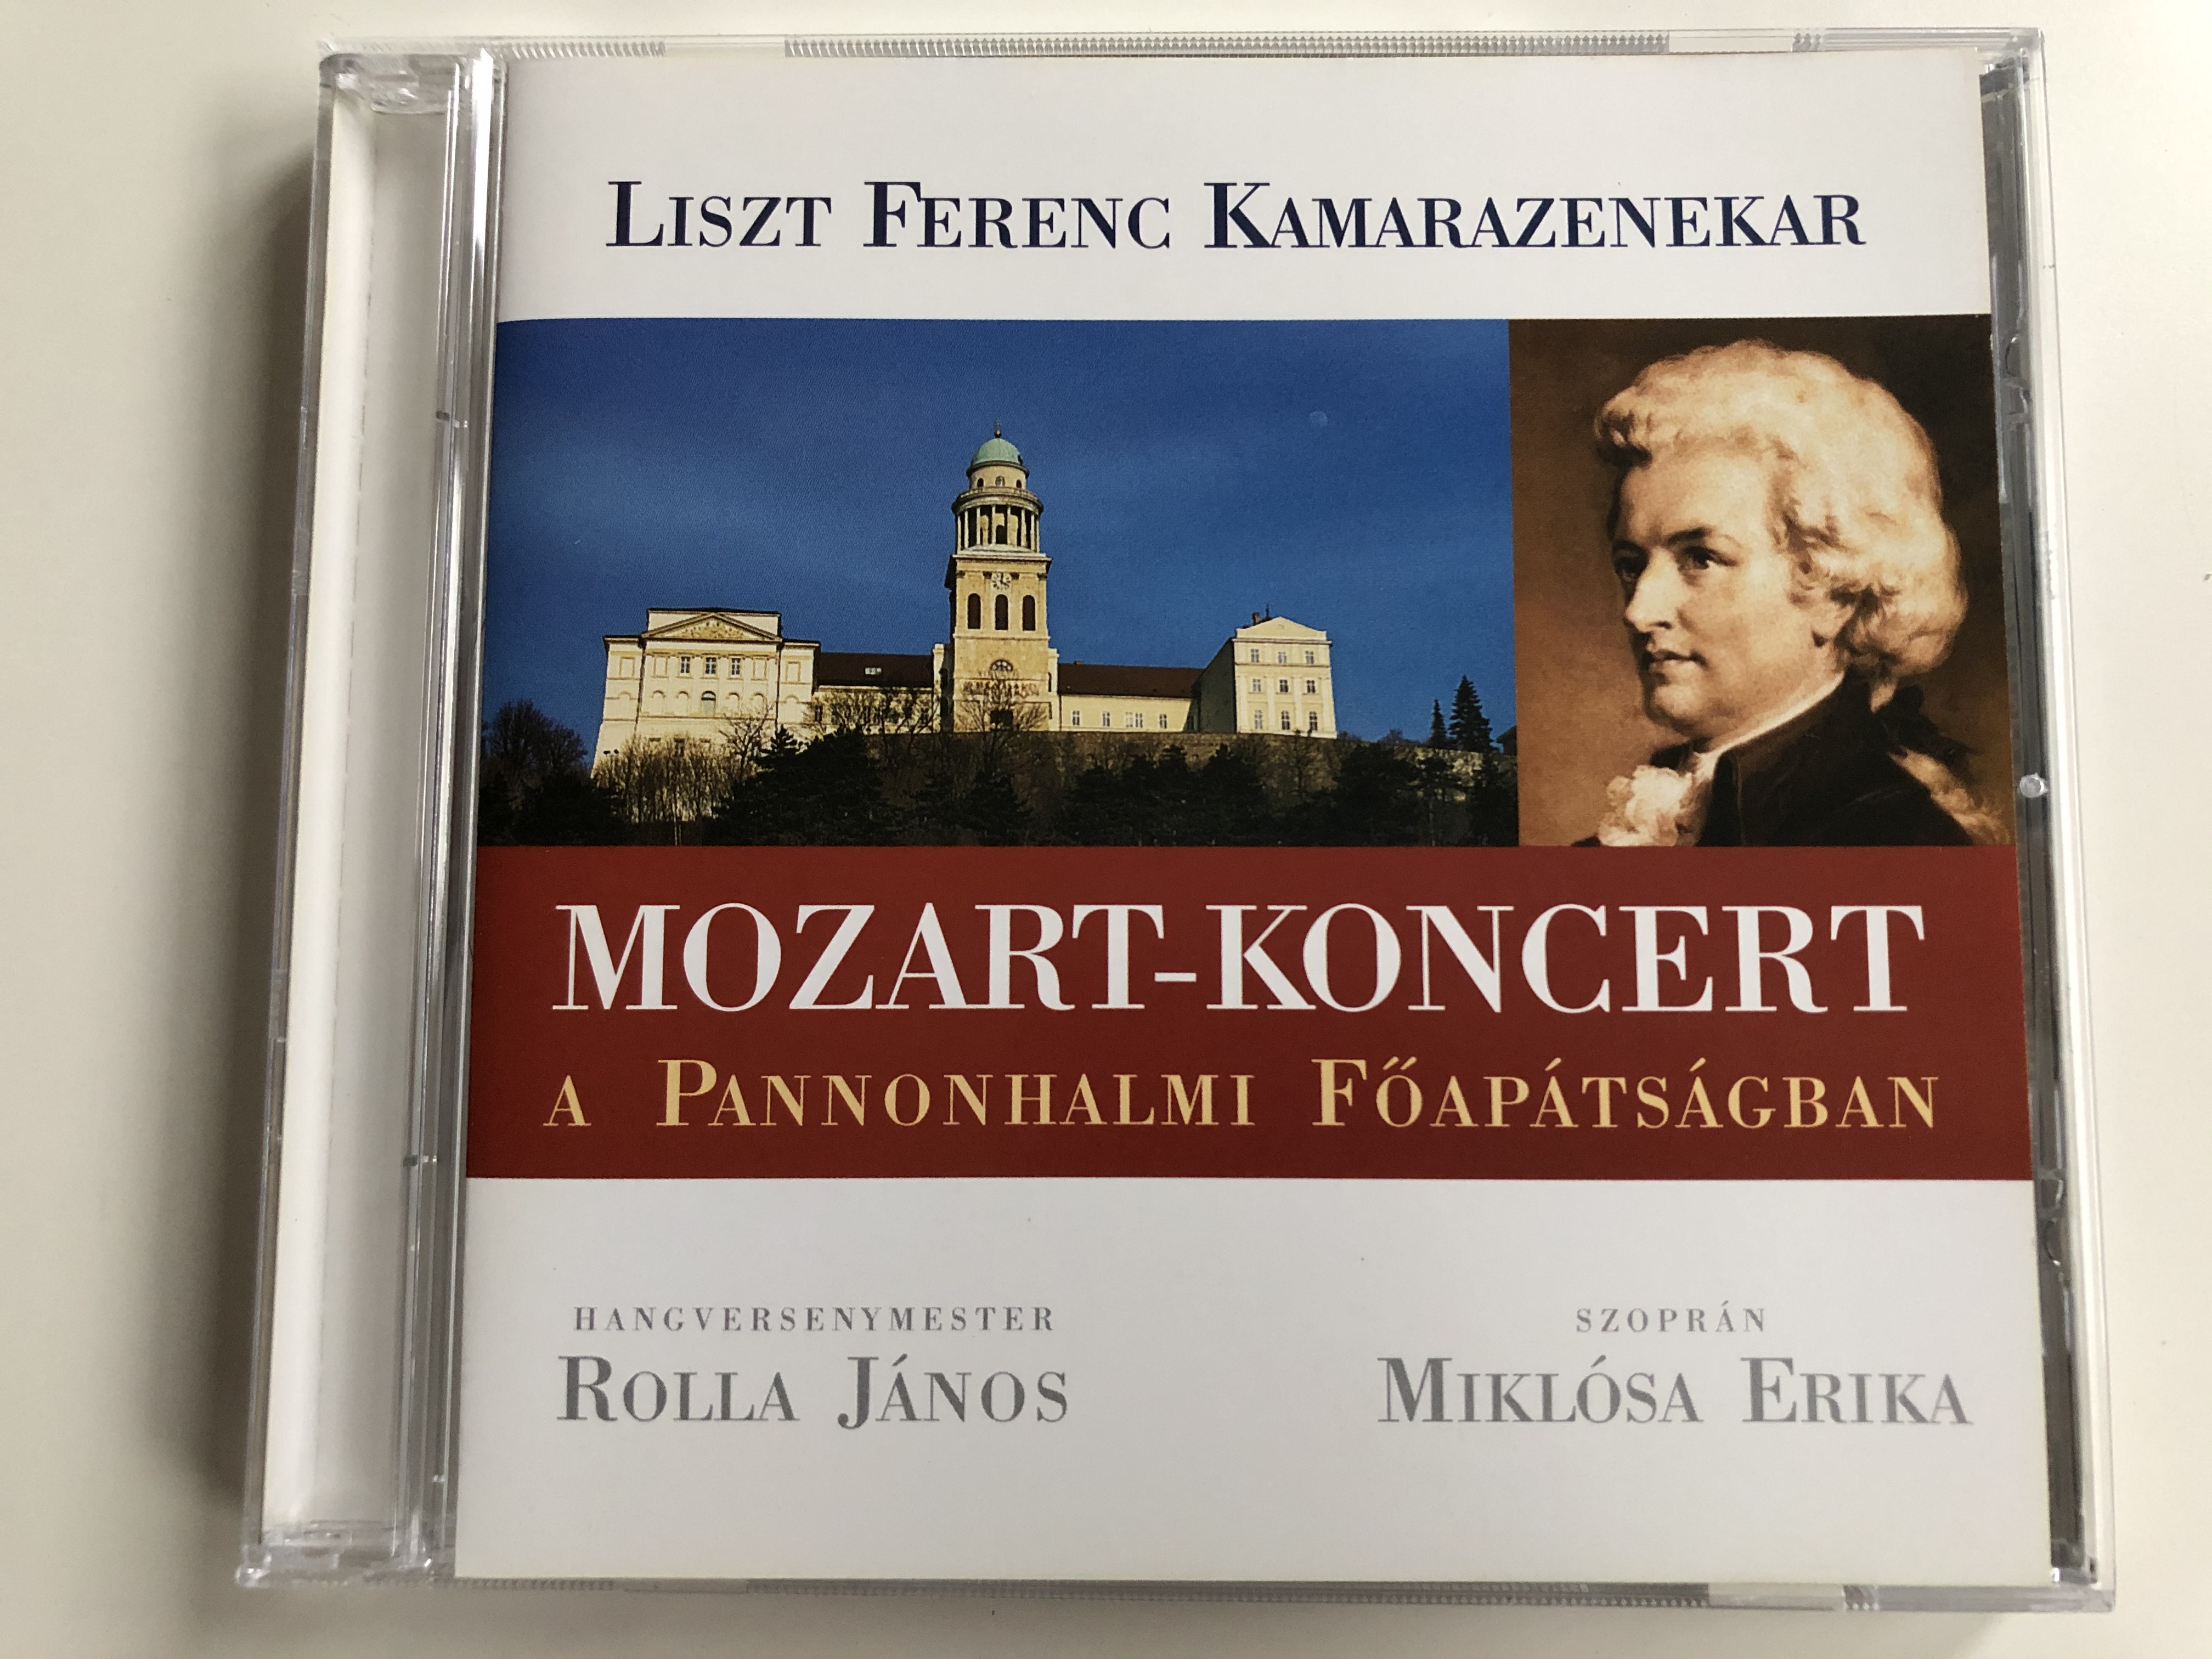 liszt-ferenc-kamarazenekar-mozart-koncert-a-pannonhalmi-f-ap-ts-gban-rolla-j-nos-mikl-sa-erika-mkb-bank-rt.-audio-cd-2005-mkb-016-1-.jpg